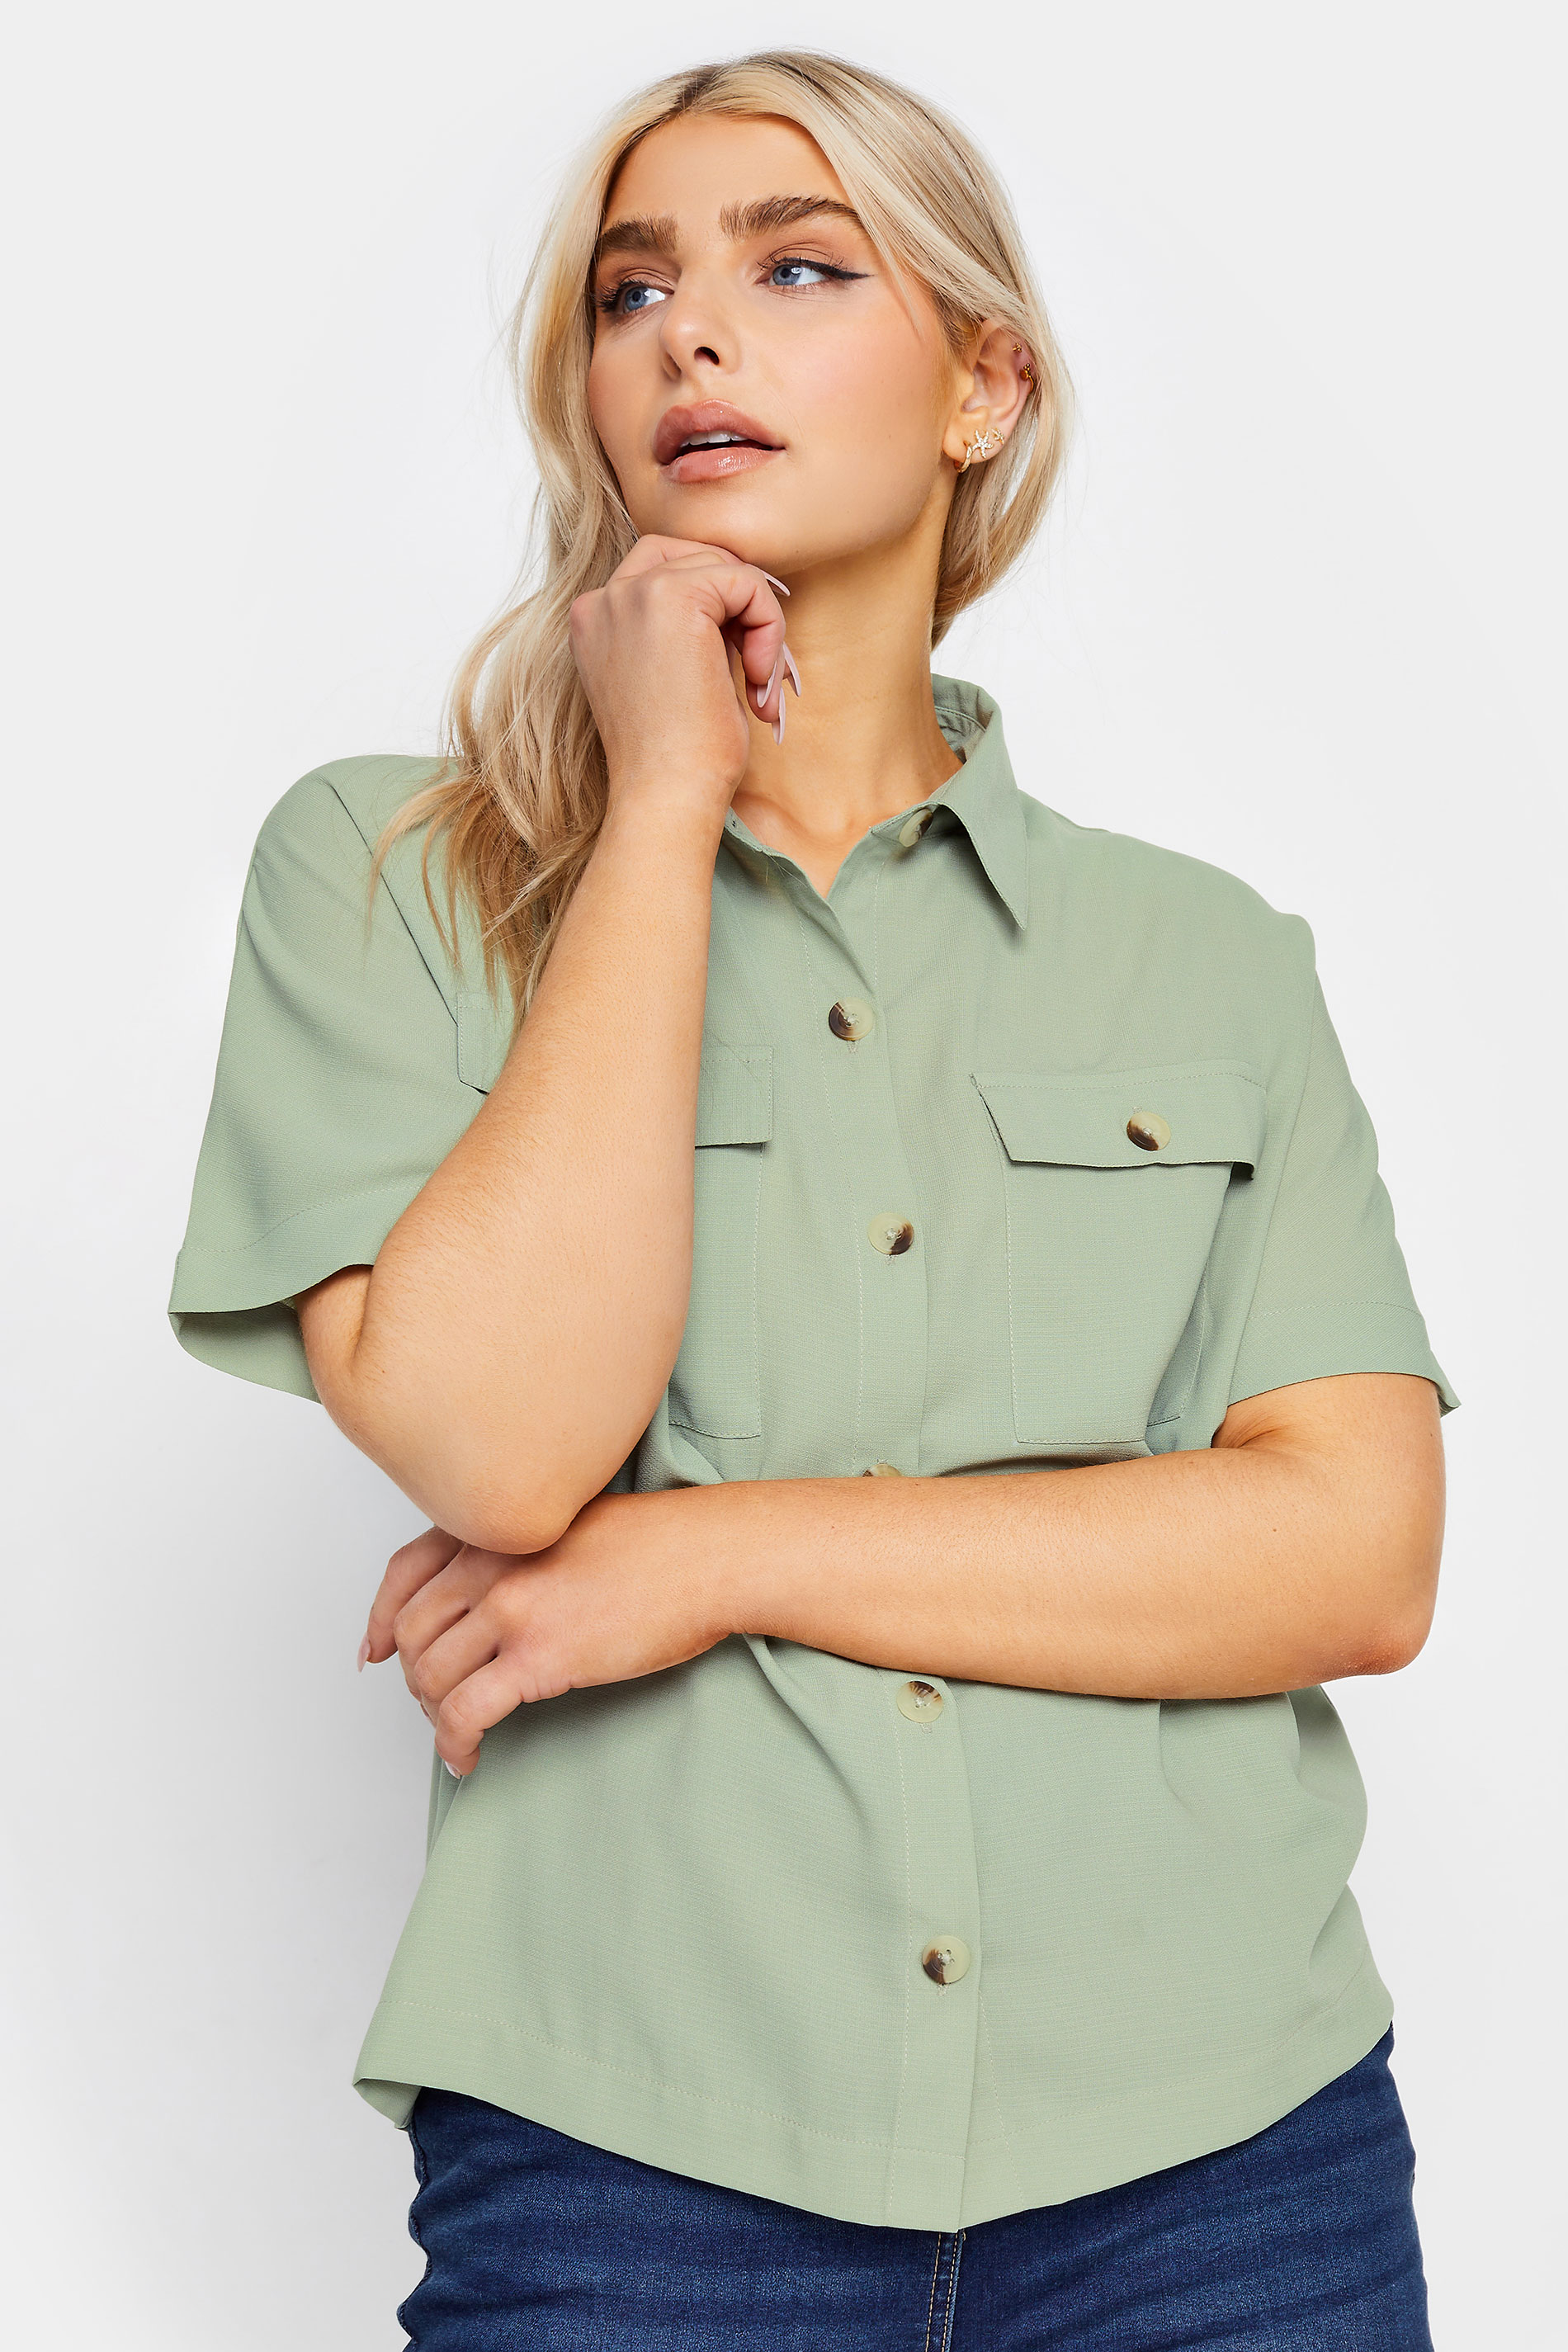 M&Co Sage Green Short Sleeve Utility Shirt | M&Co 2